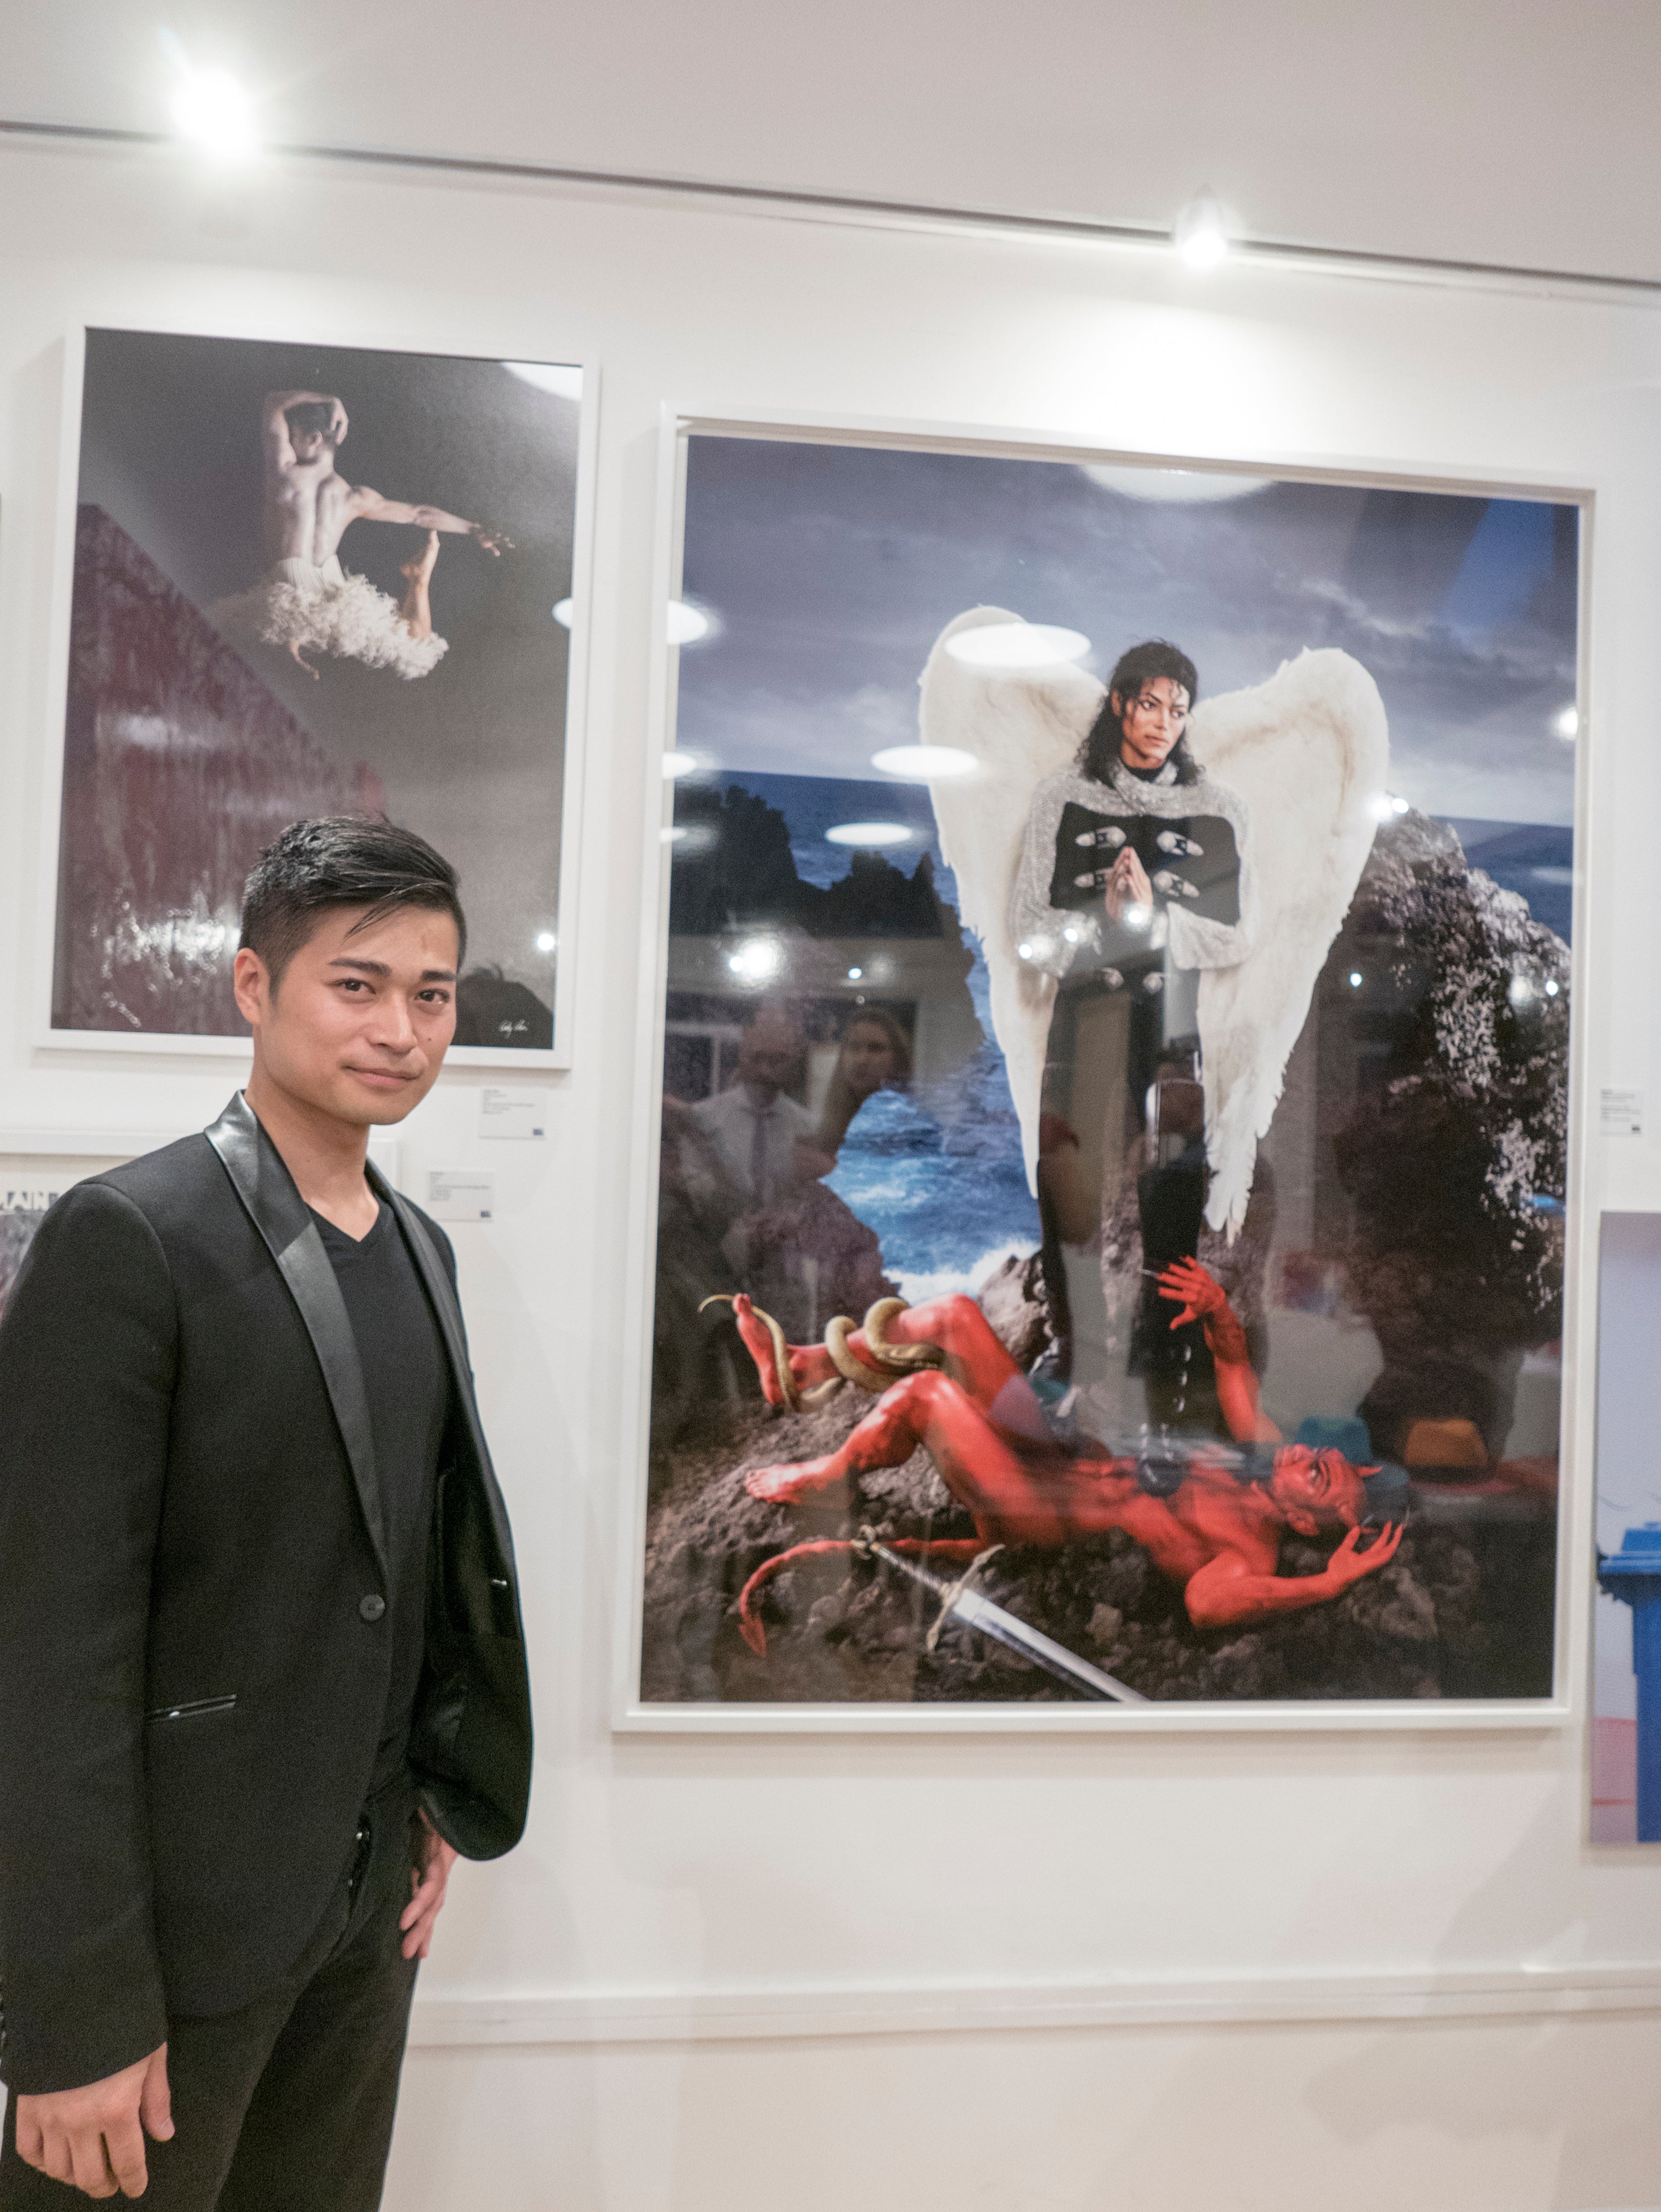 Cody's exhibiting his Self Portrait with David Lachapelle's Michael Jackson Archangel 